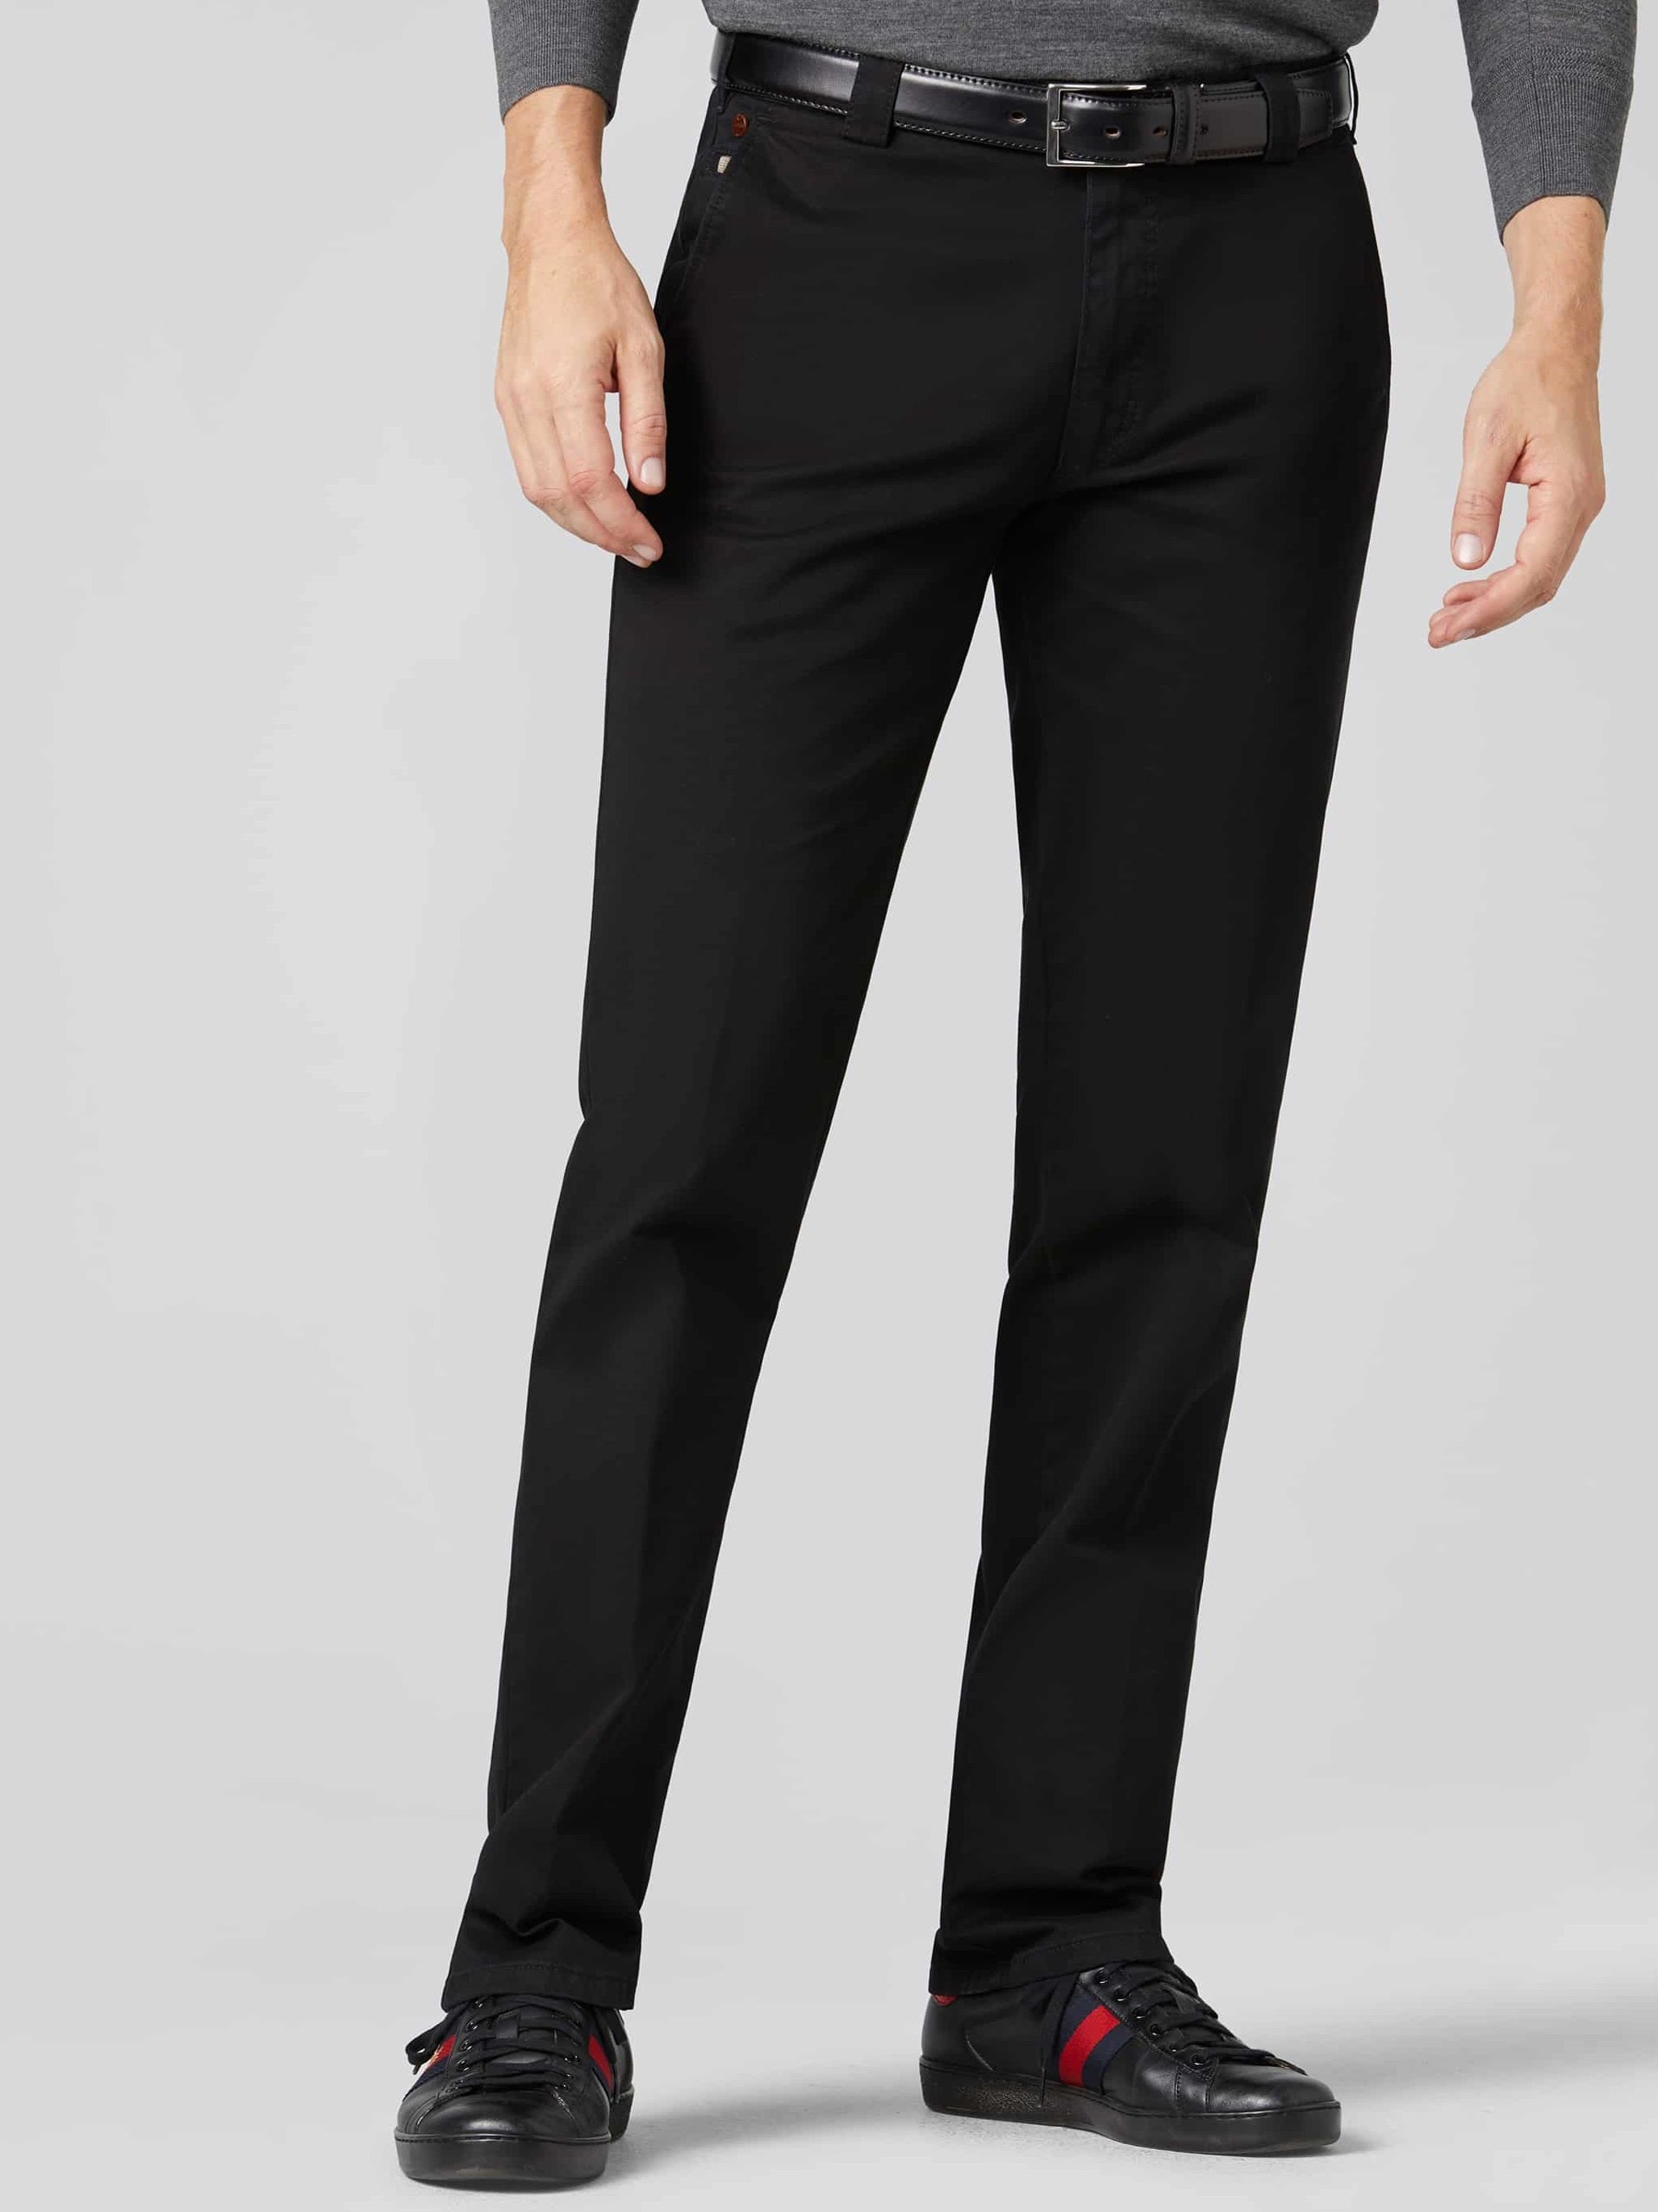 MEYER Roma Trousers - 316 Luxury Cotton Chinos - Black